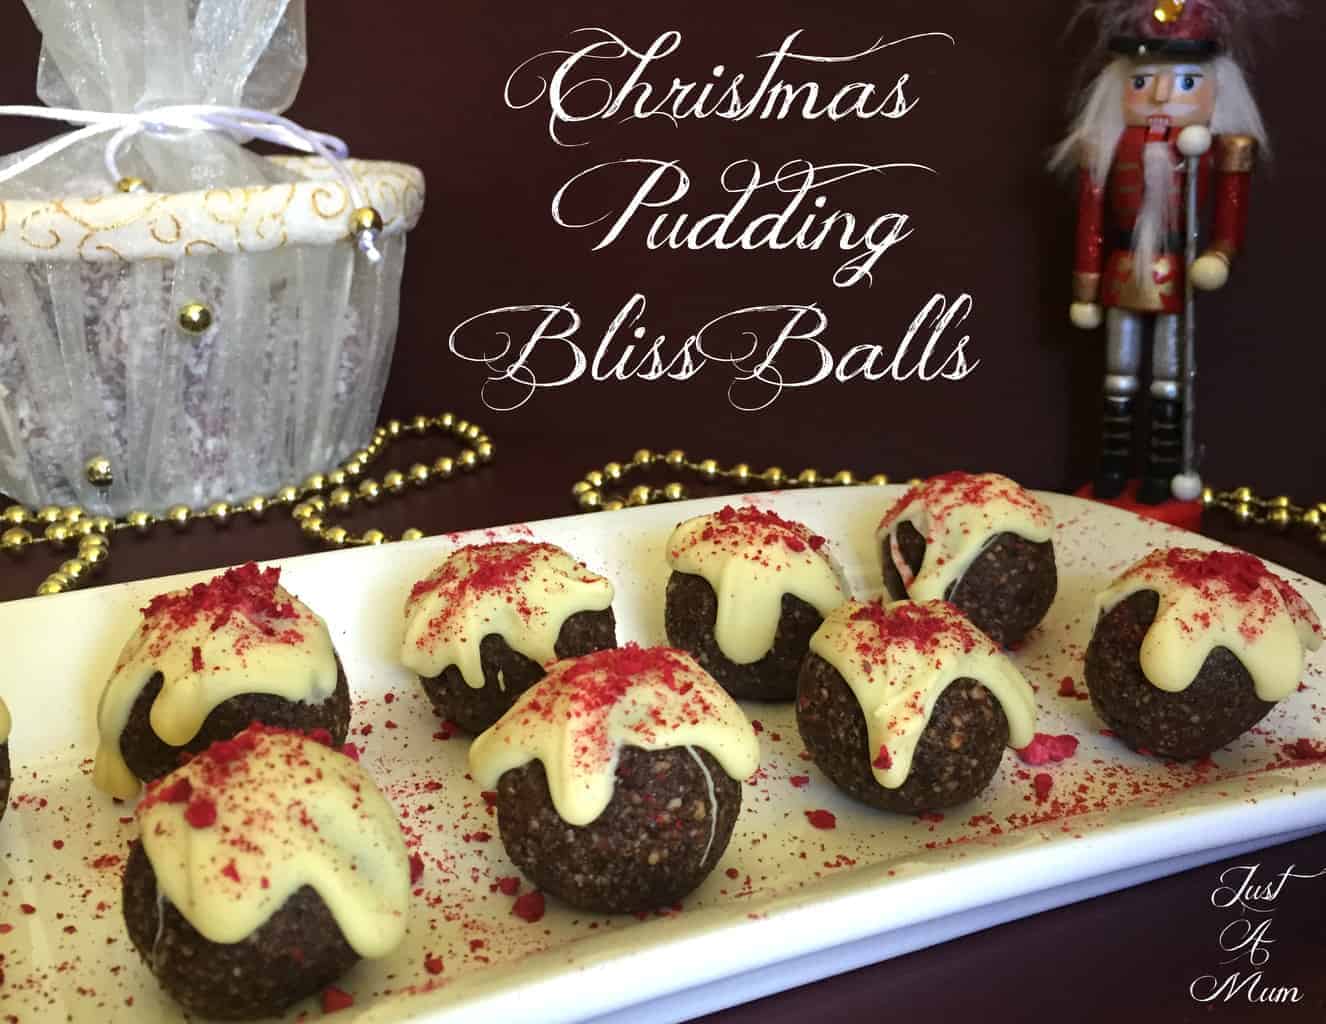 Just A Mum's Christmas Pudding Bliss Balls